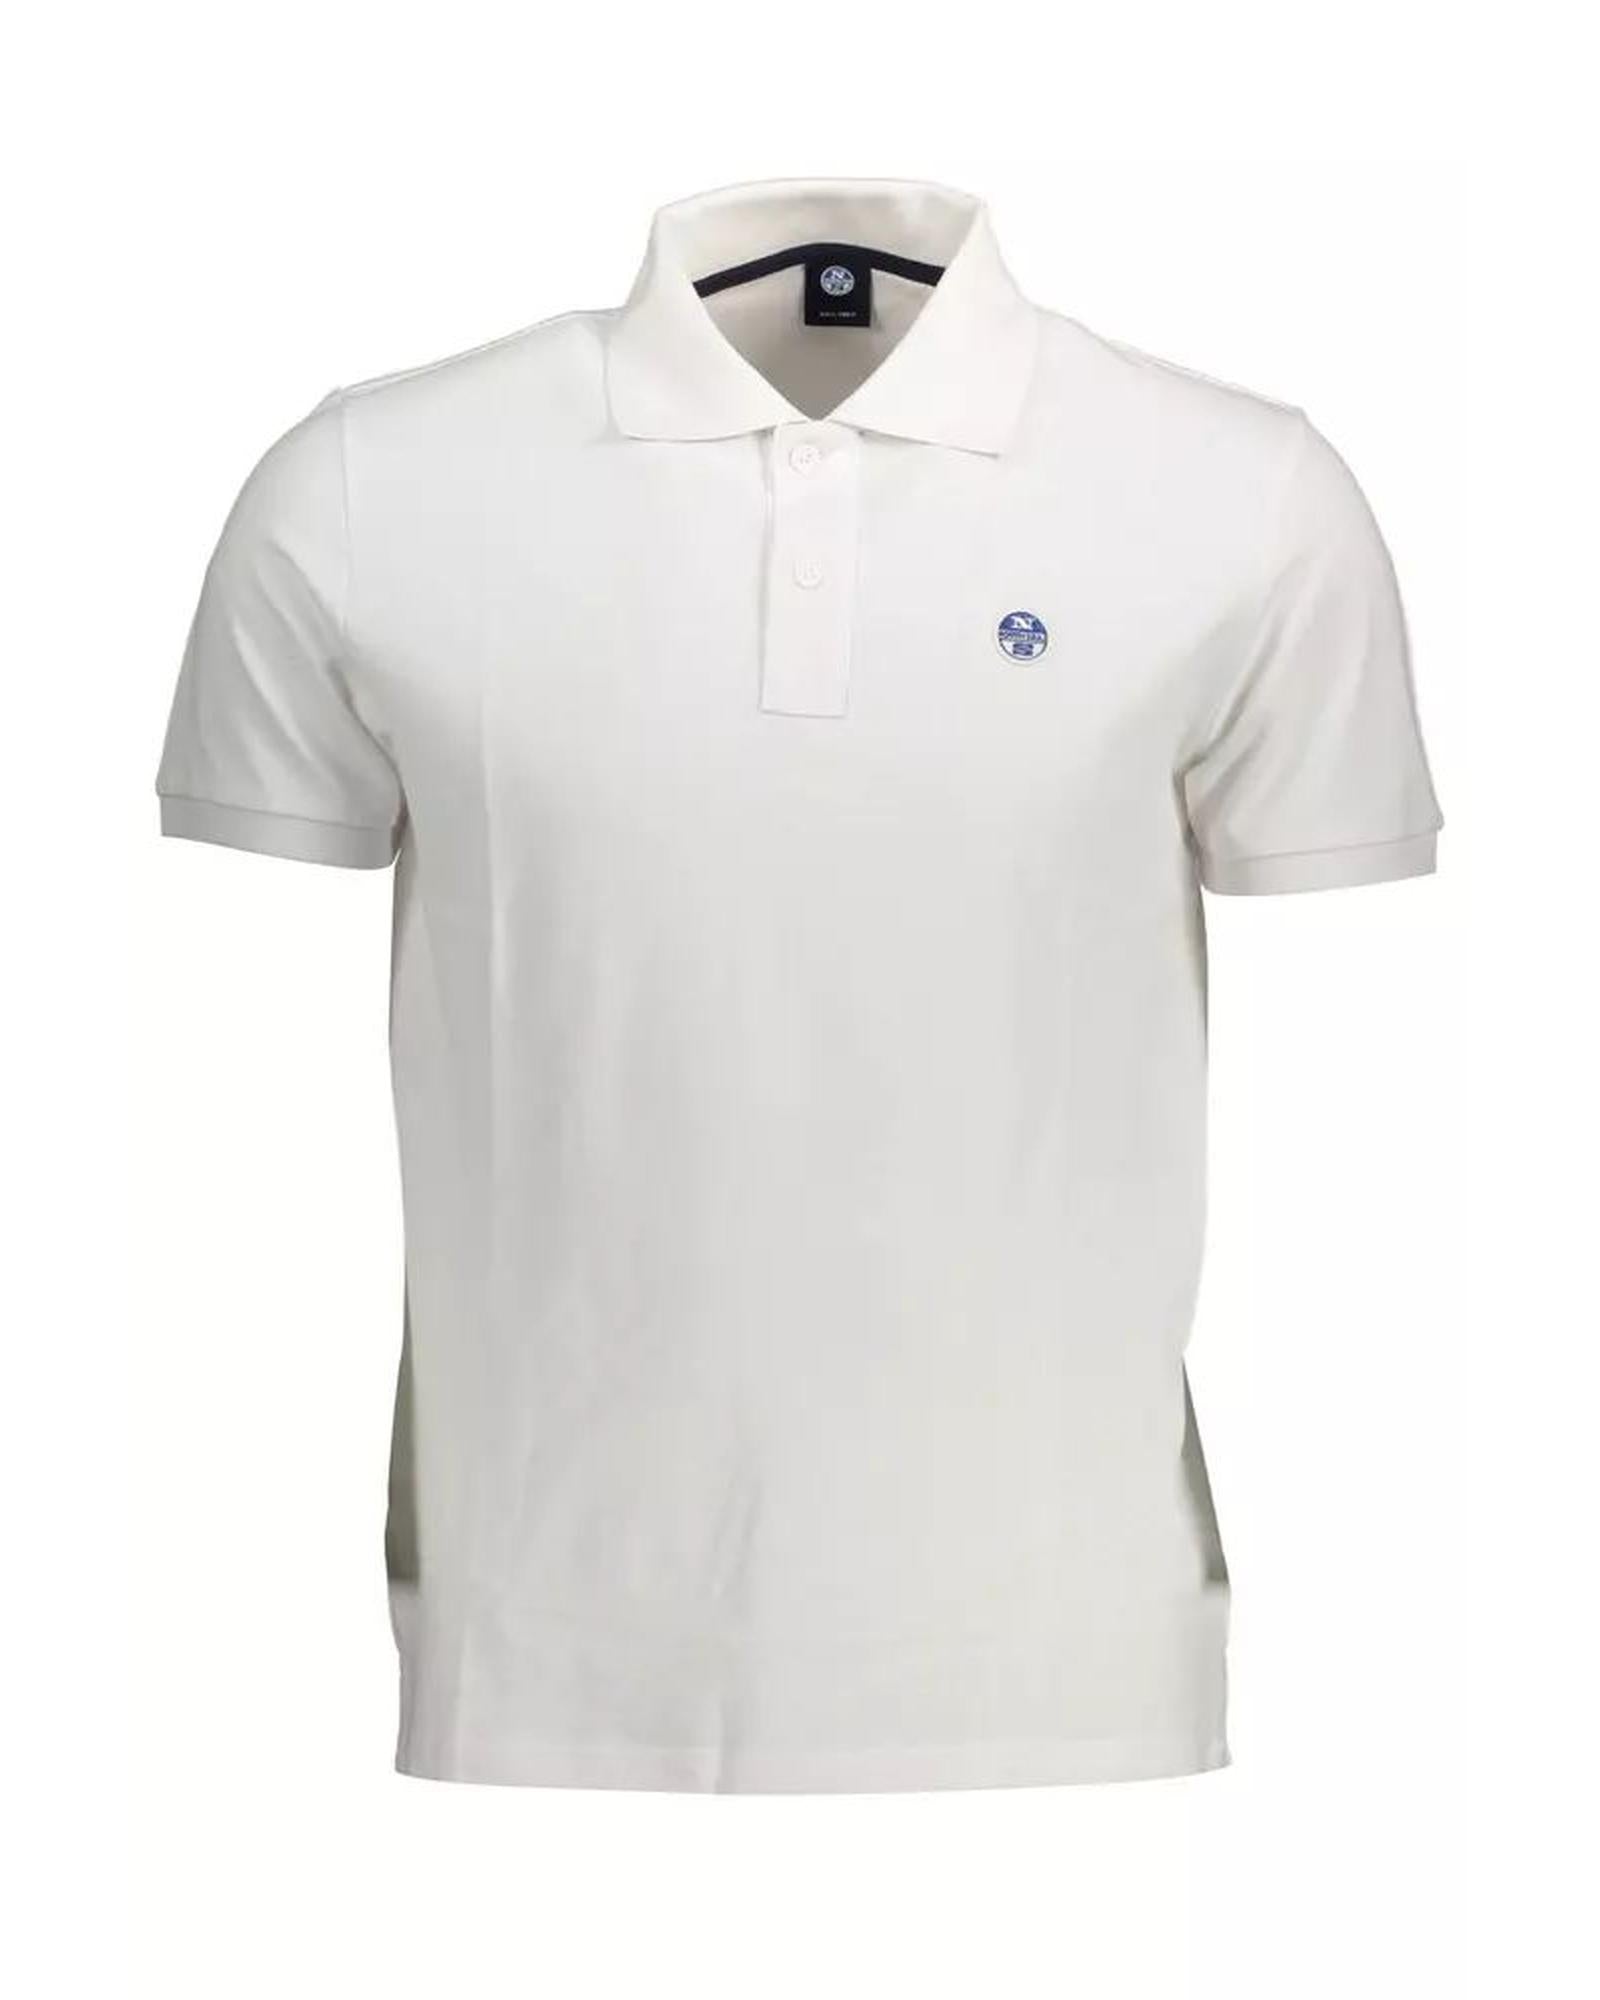 North Sails Men's White Cotton Polo Shirt - 2XL